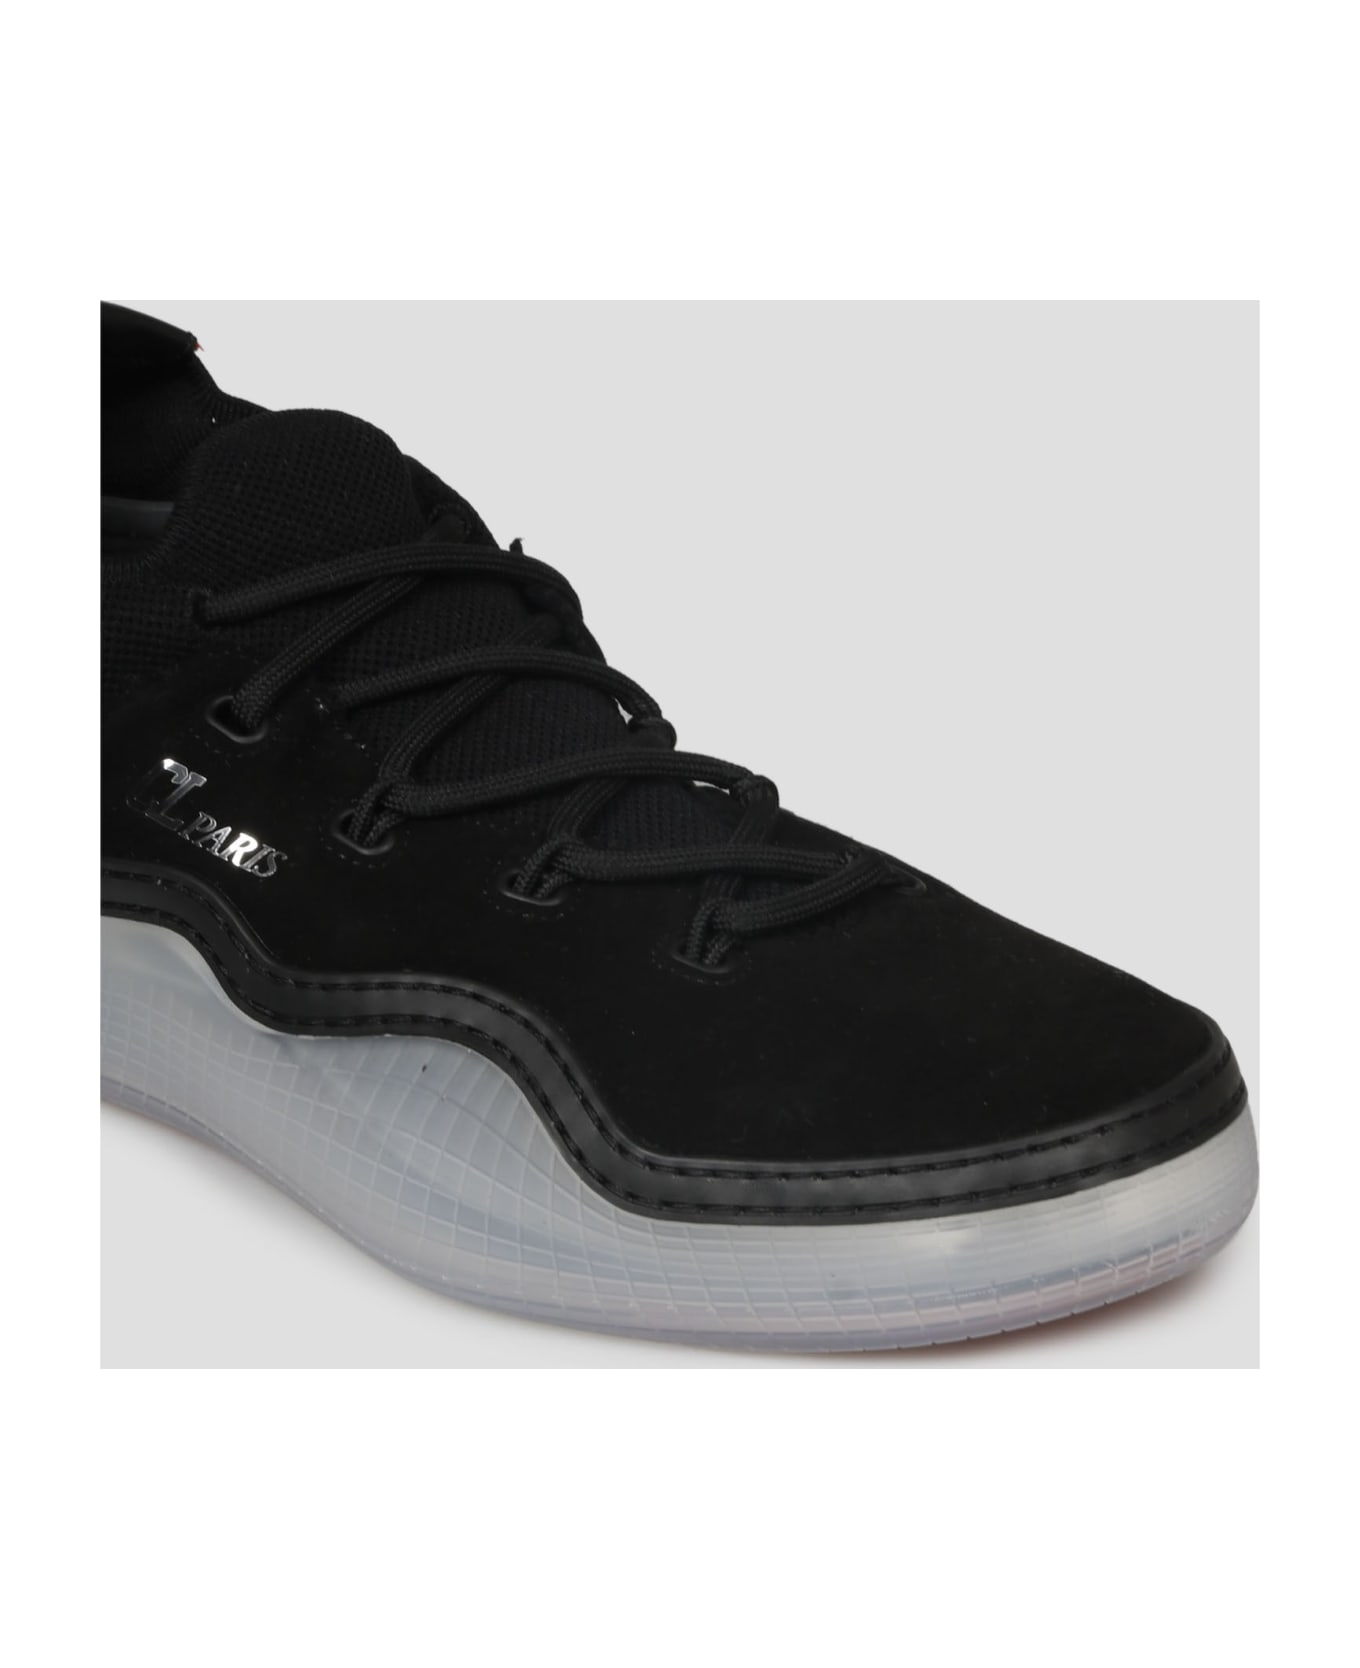 Christian Louboutin Arpoador Sneakers - Black